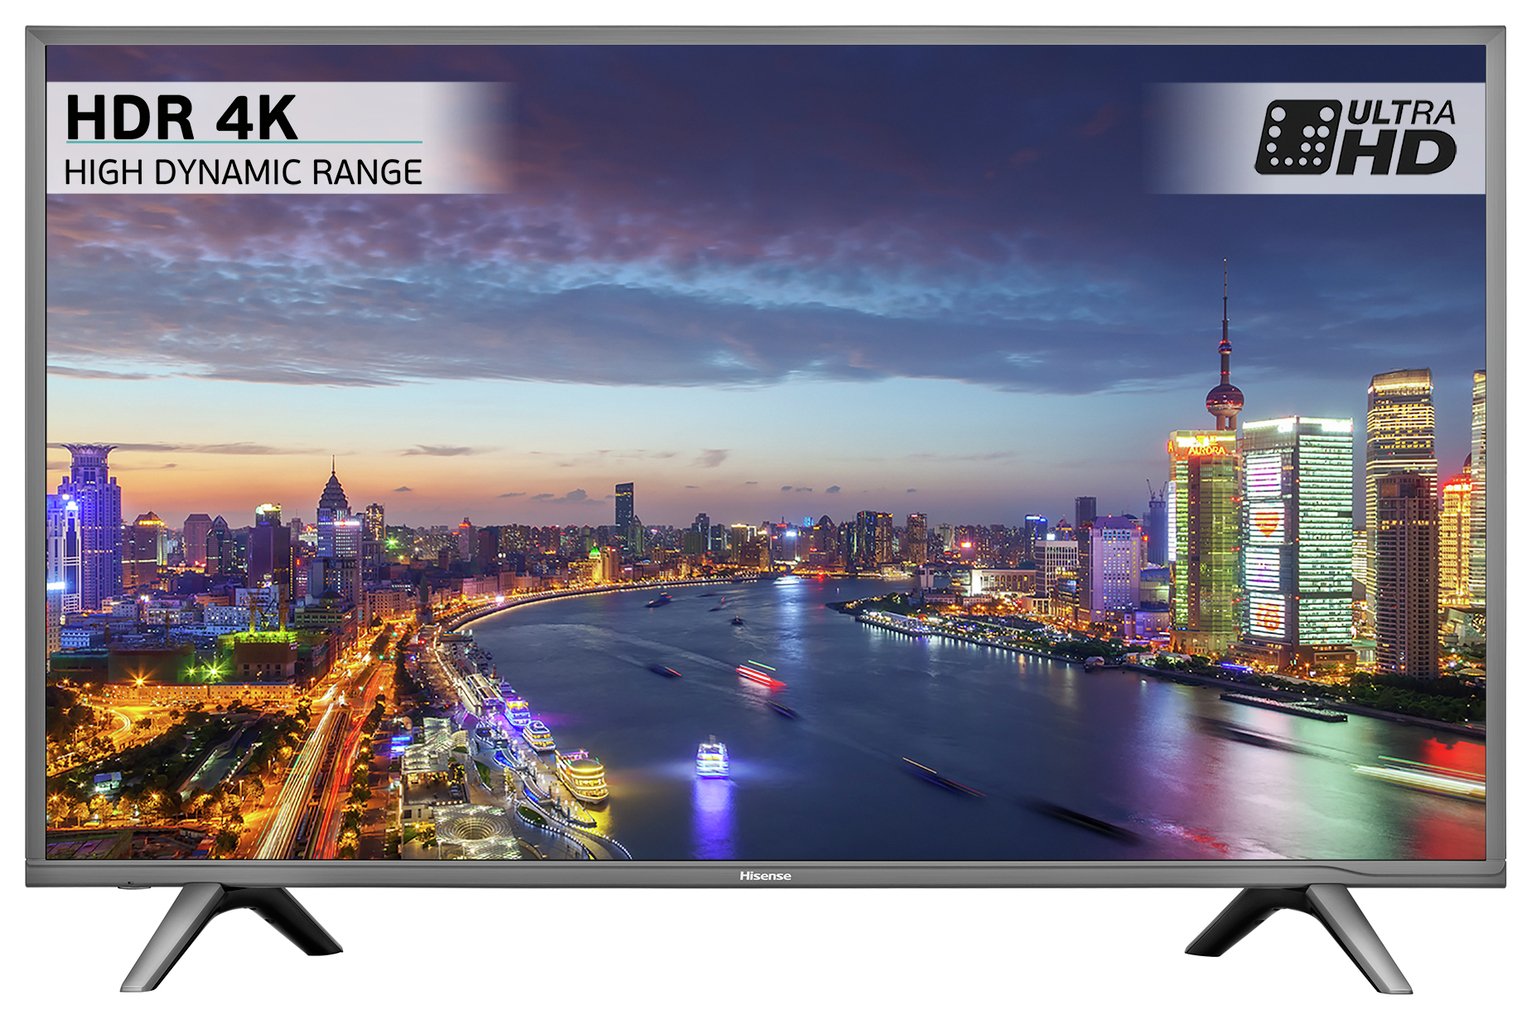 Hisense H55N5700 55 Inch 4K Ultra HD Smart TV with HDR